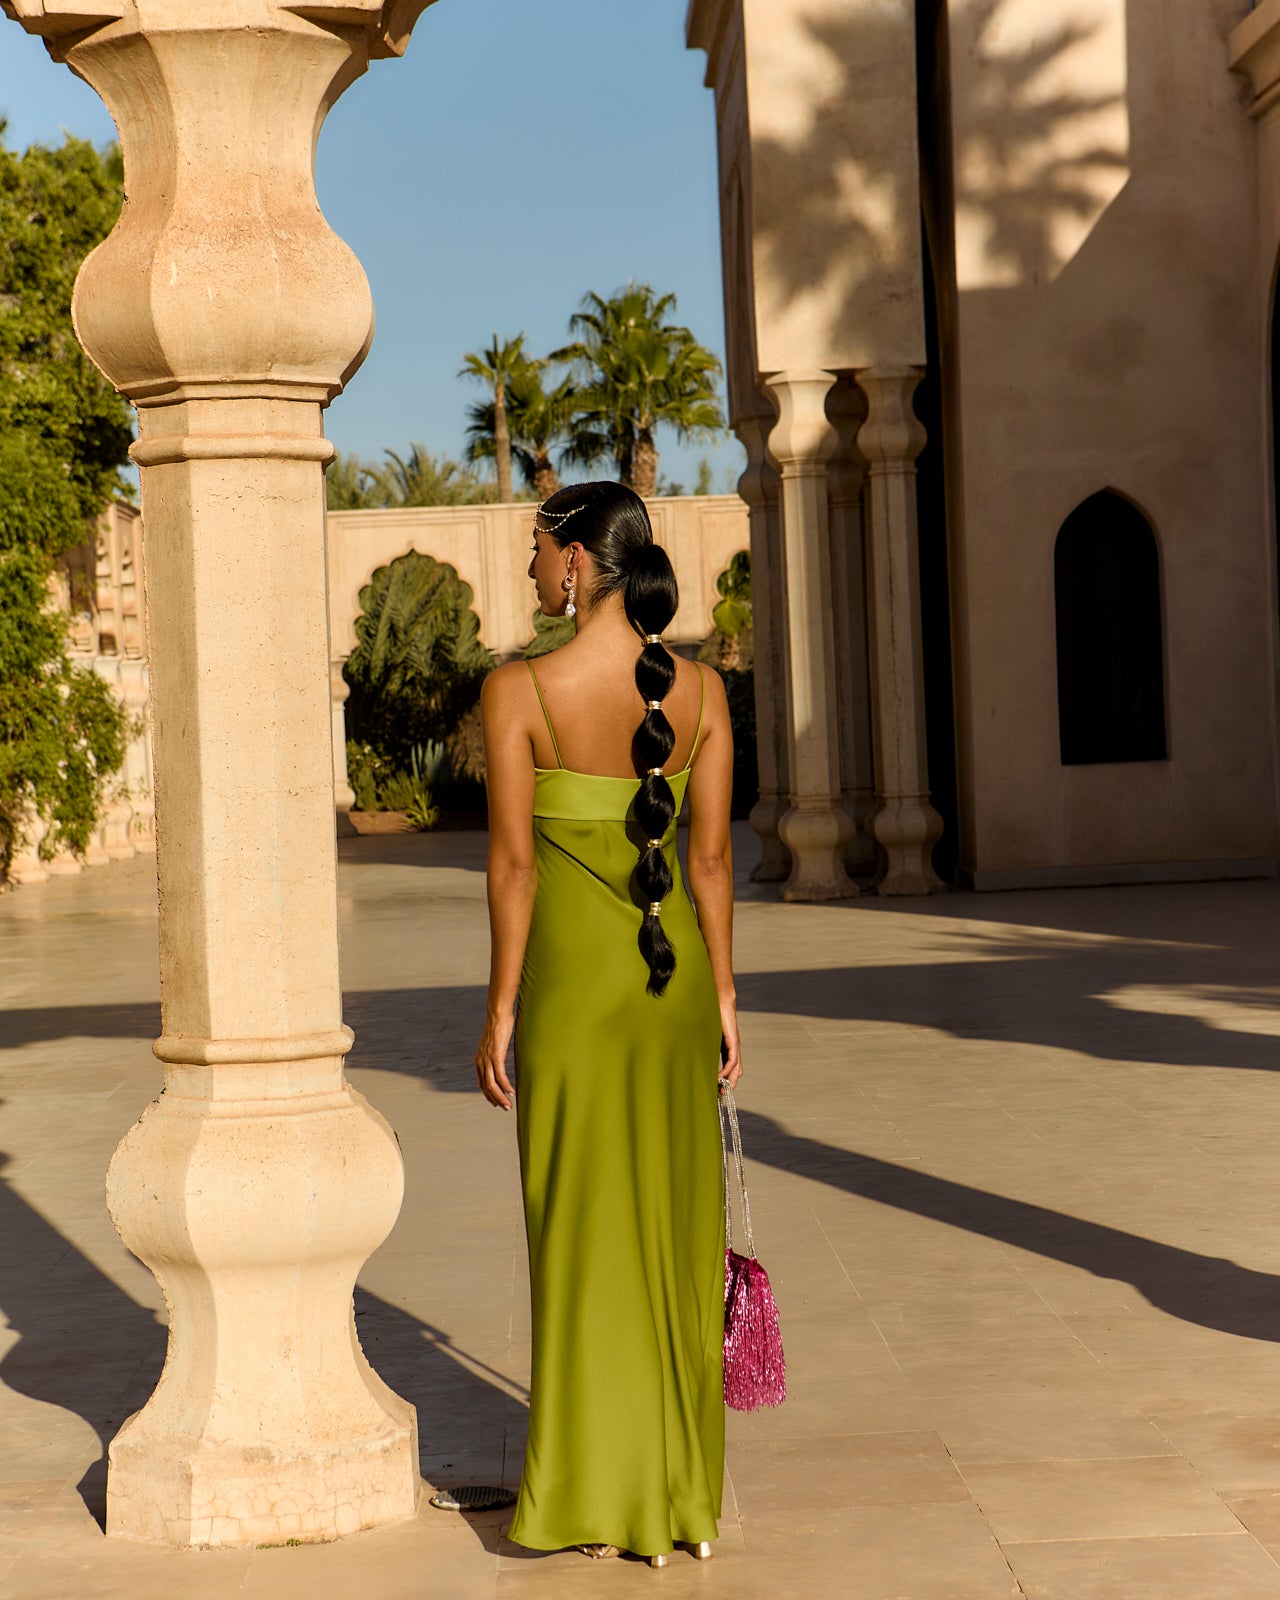 Brahma Green Dress